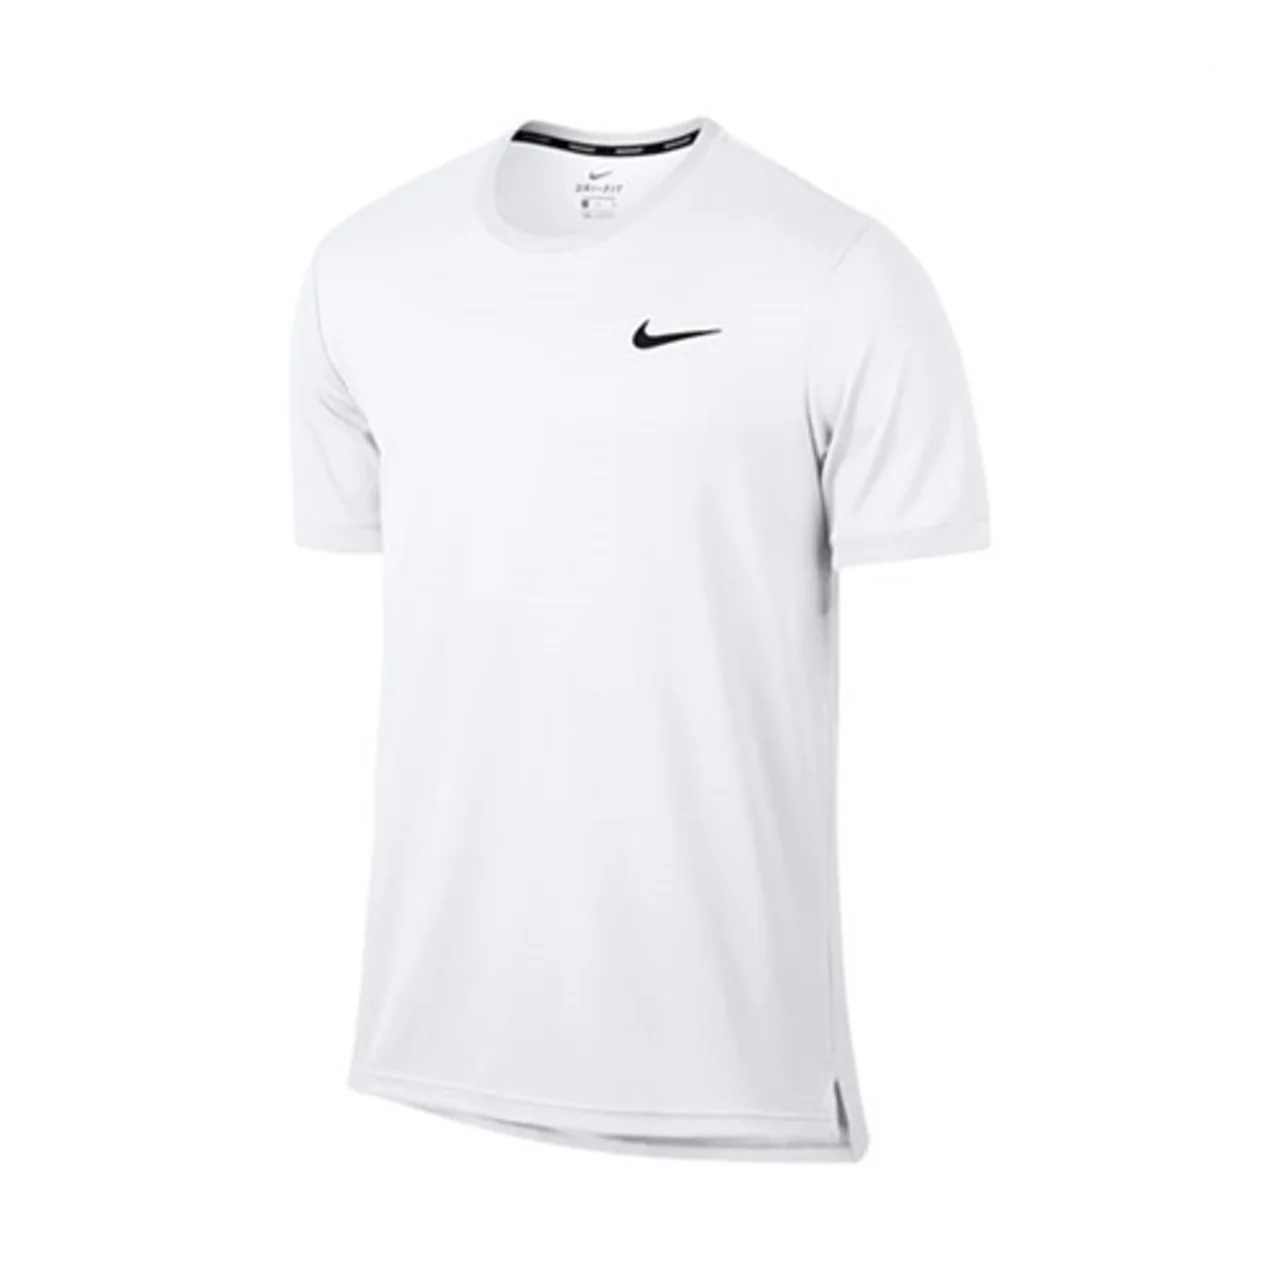 Nike Dry Top Team All White